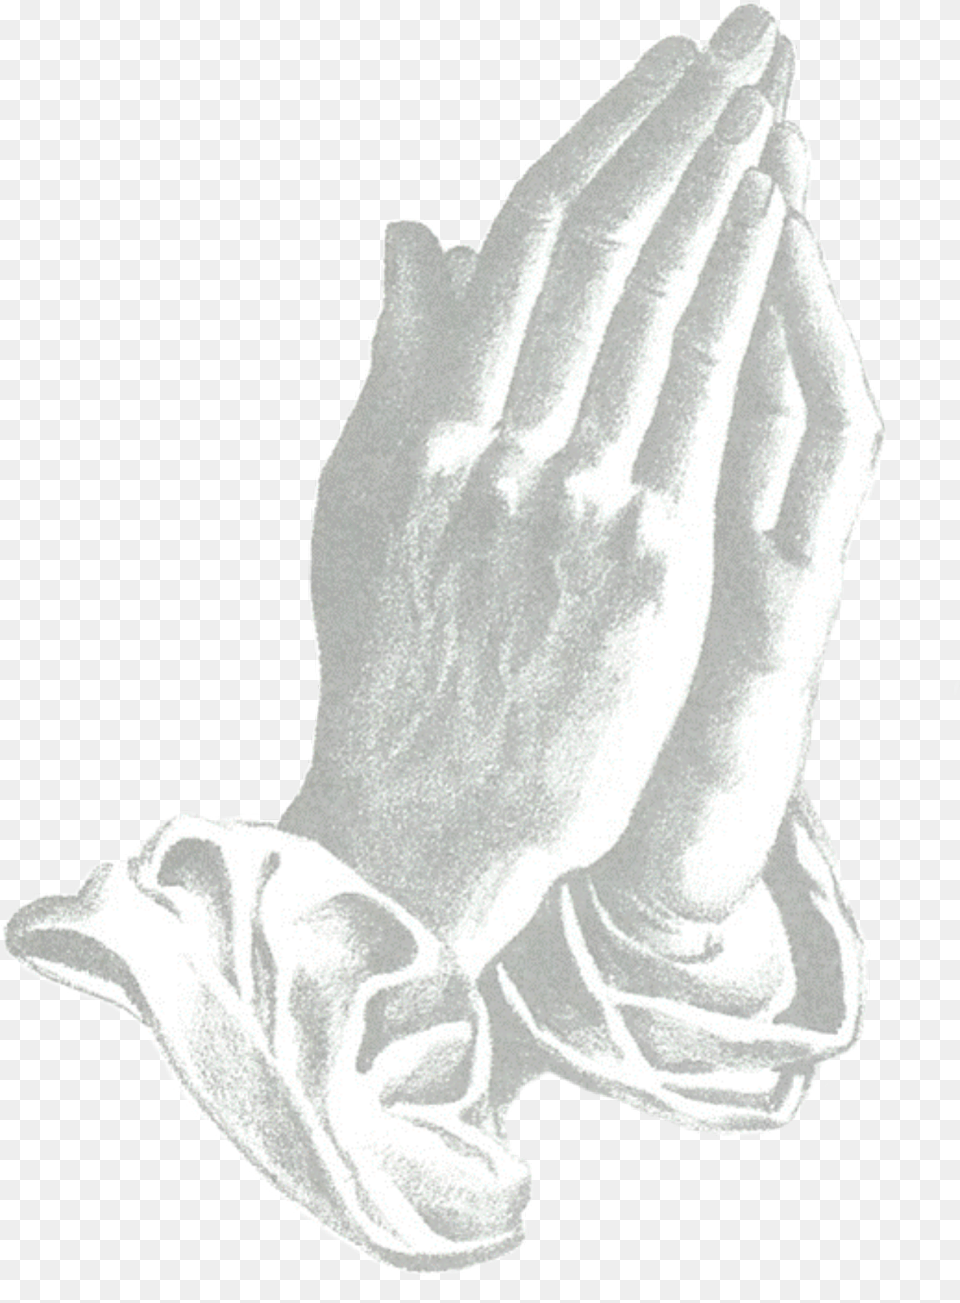 Pray Praying Prayer Prayers Prayinghands Hands Hand, Clothing, Glove, Baby, Person Png